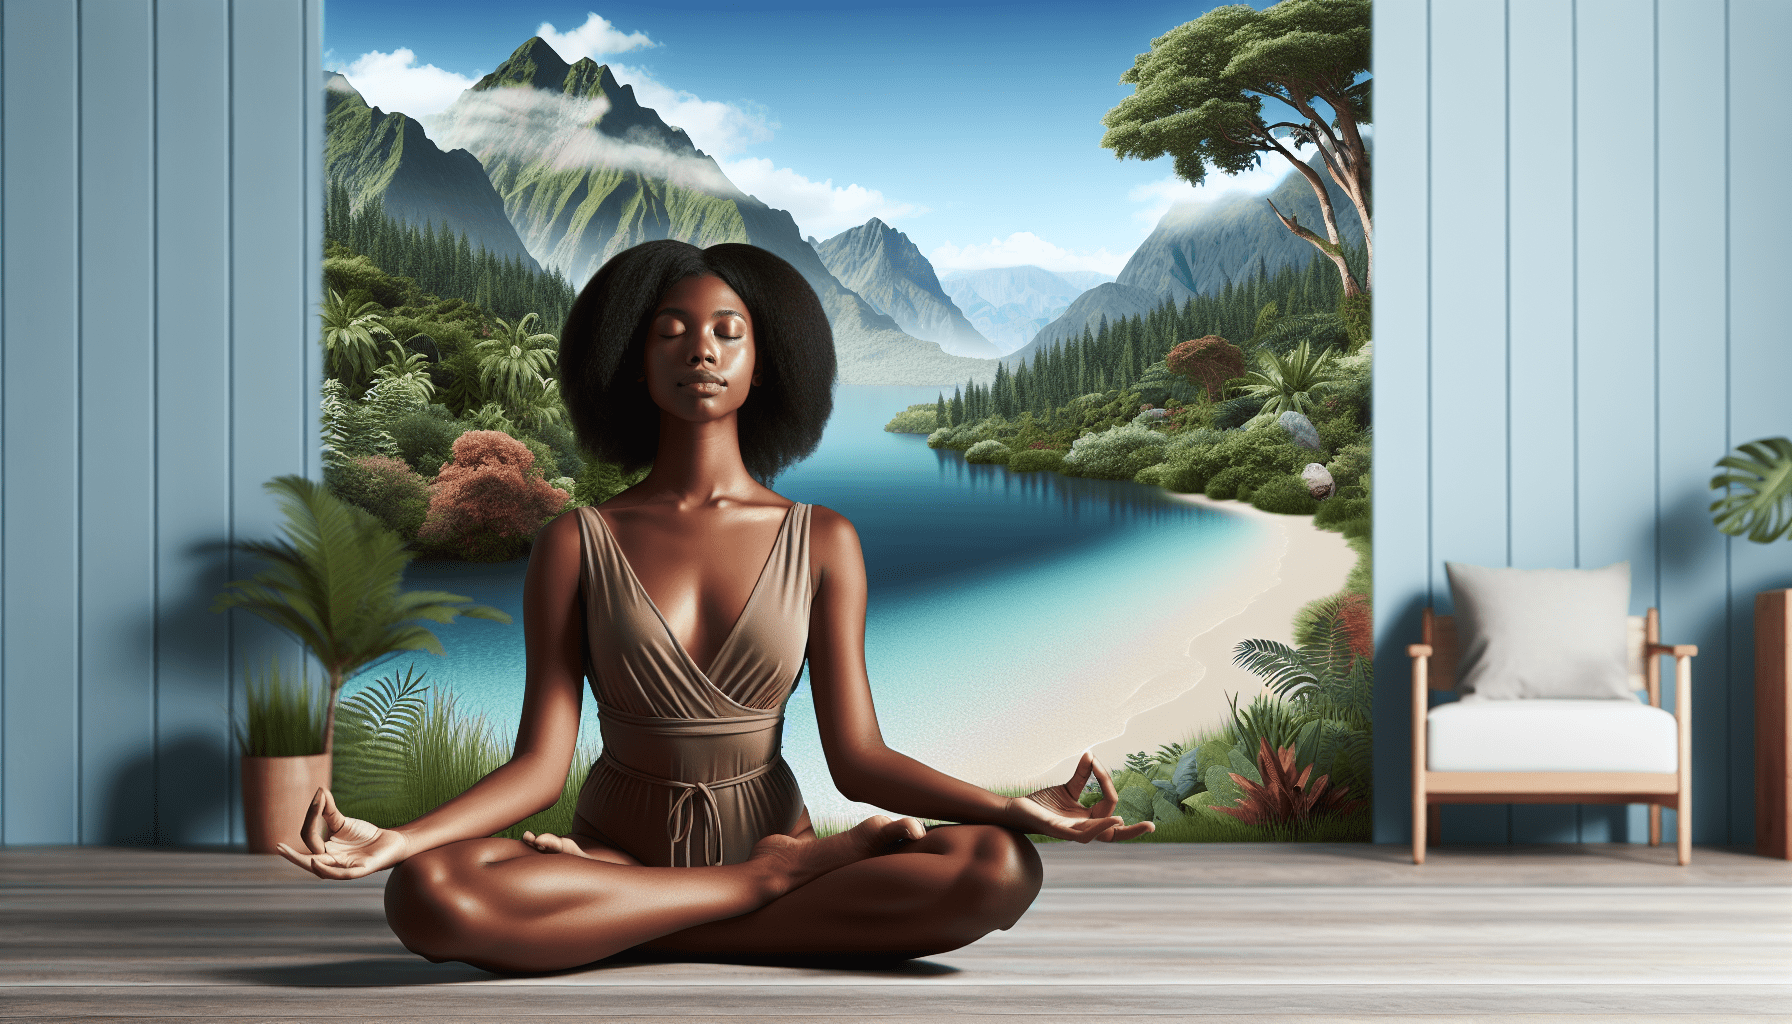 Mindfulness Meditation For Beginners